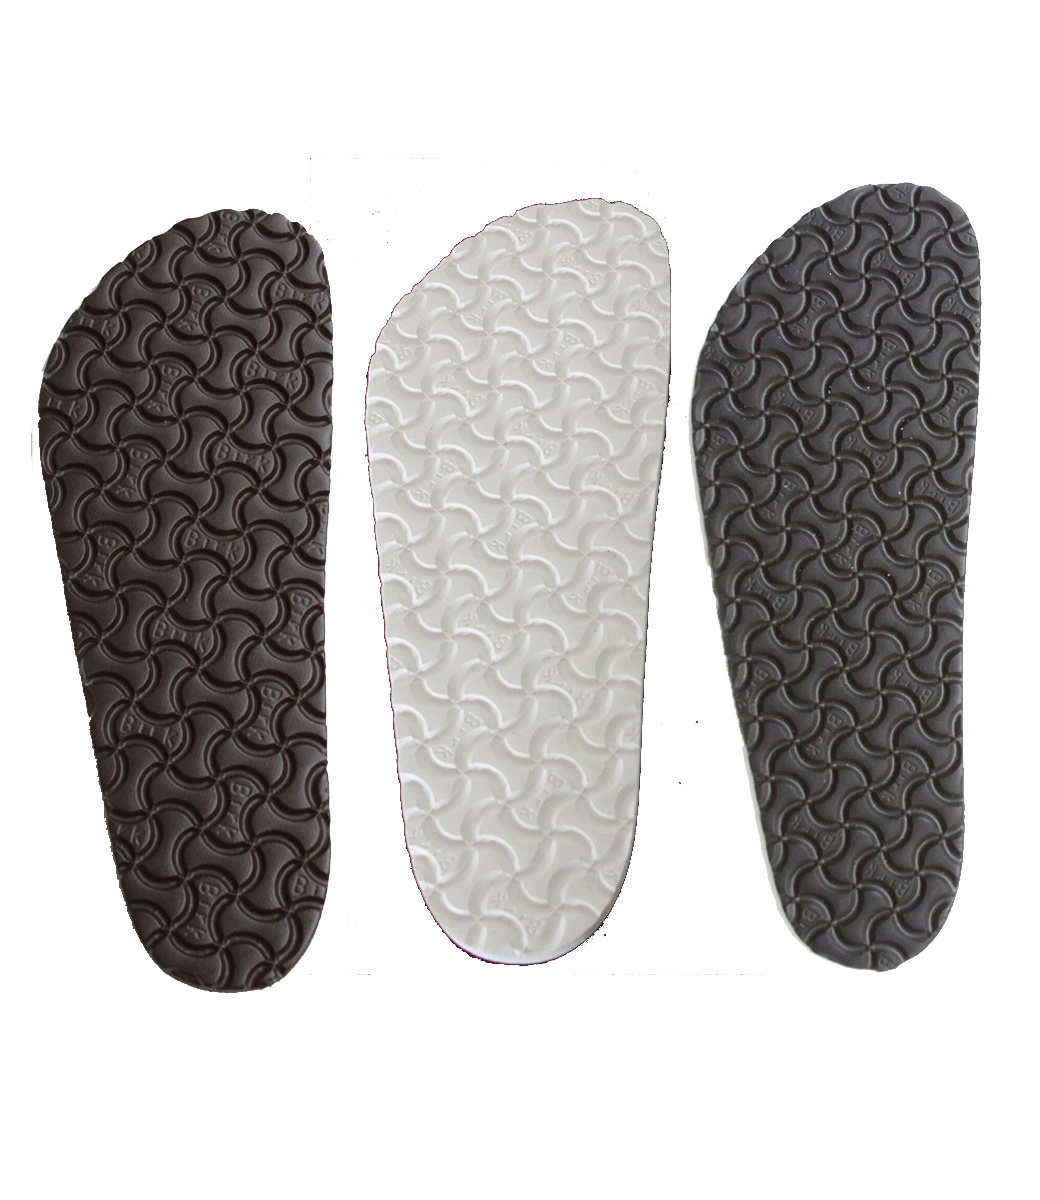 Birkenstock's rubber sole | Tony Pappas 